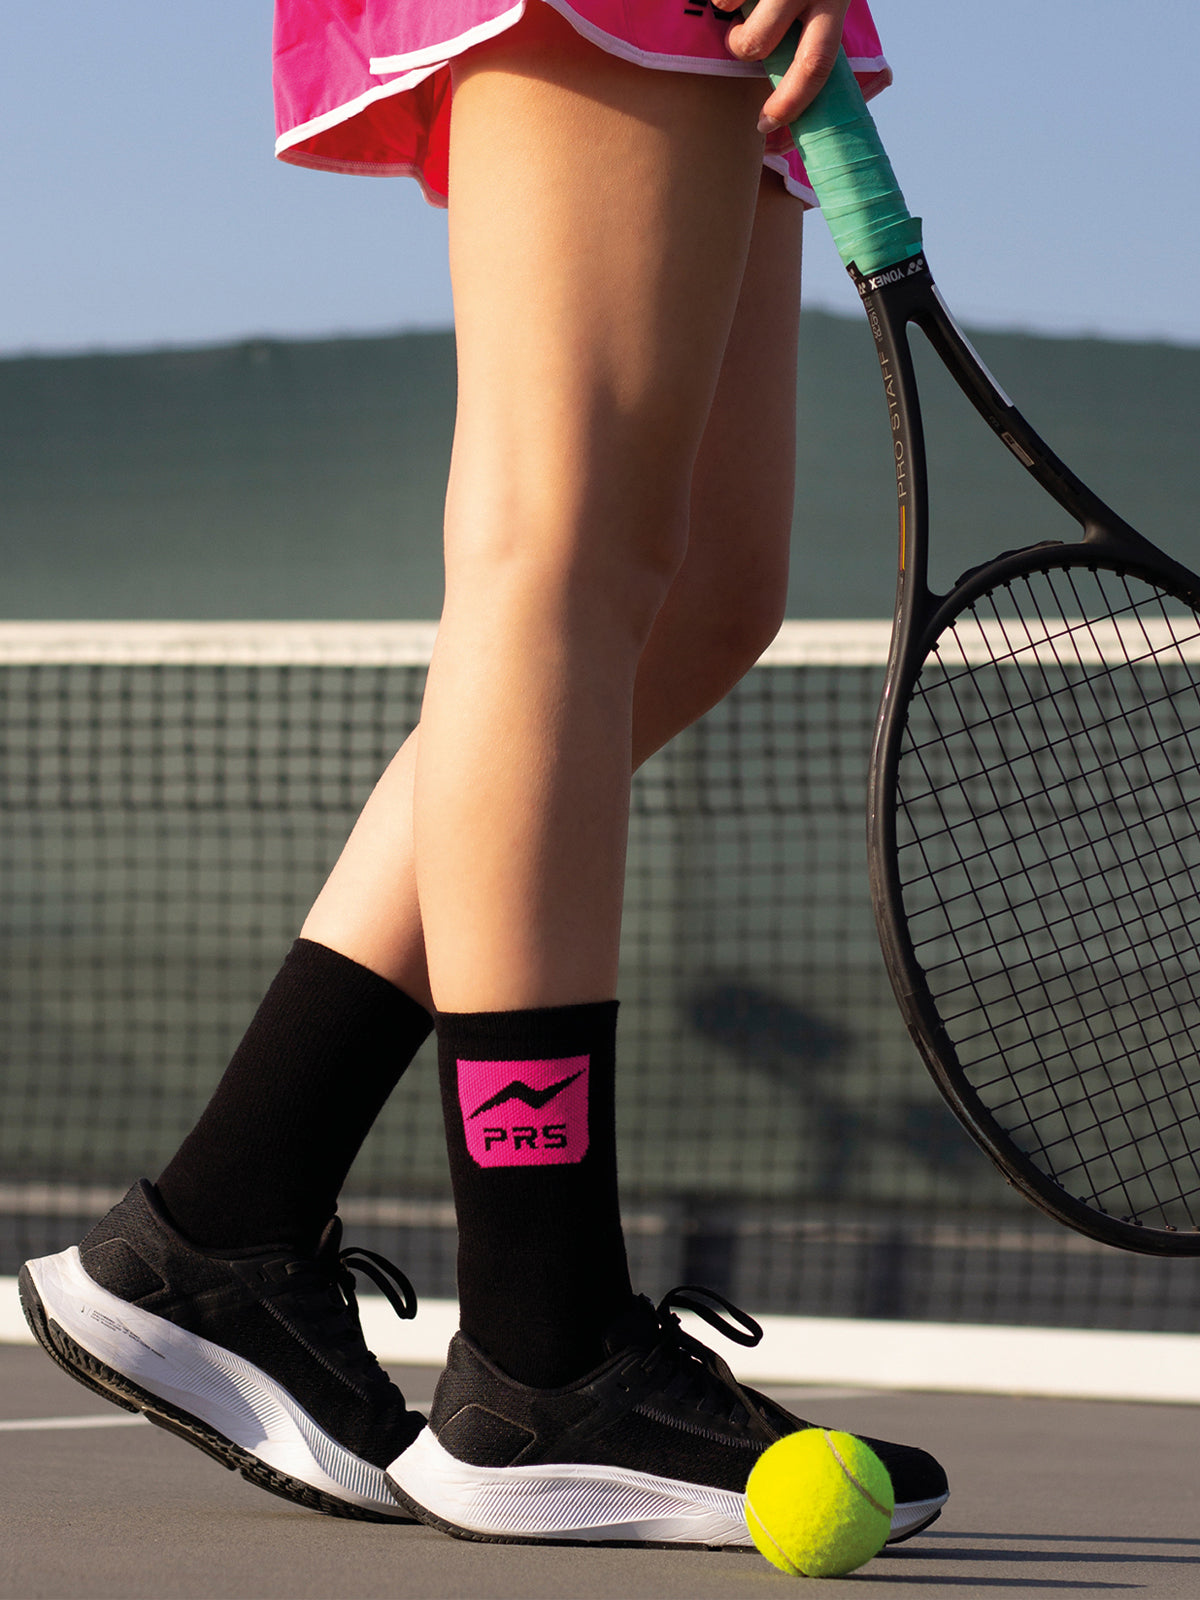 Short Cotton Socks for Women for Tennis | Plain Color | Pack of 2 Pairs | PRS PRO 01D